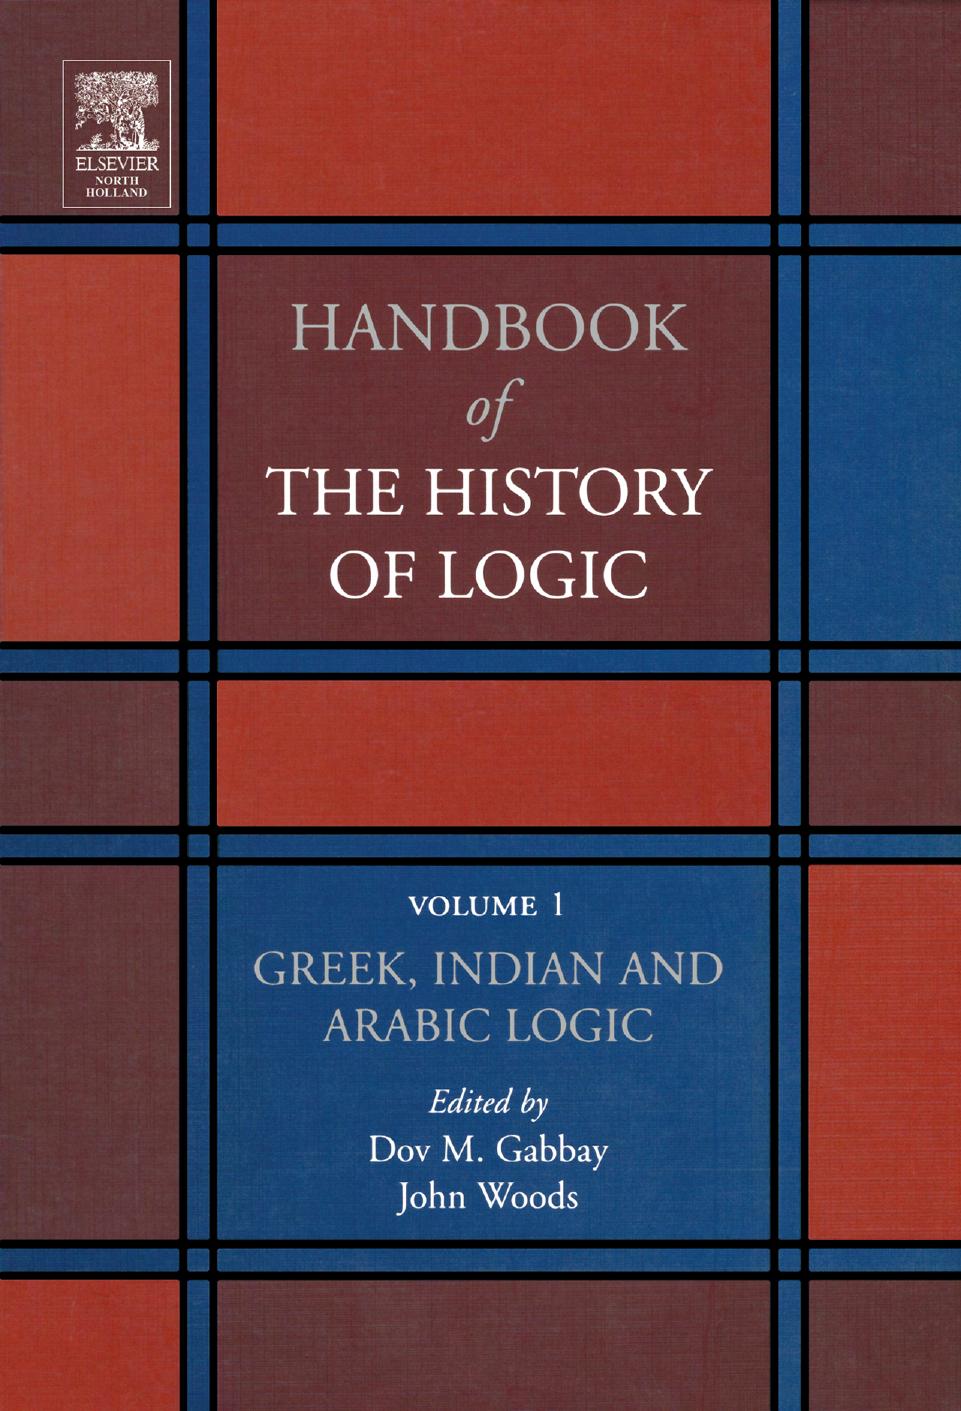 Handbook of the History of Logic. Volume 01 Greek, Indian and Arabic Logic (Dov M. Gabbay, John Woods (eds.))